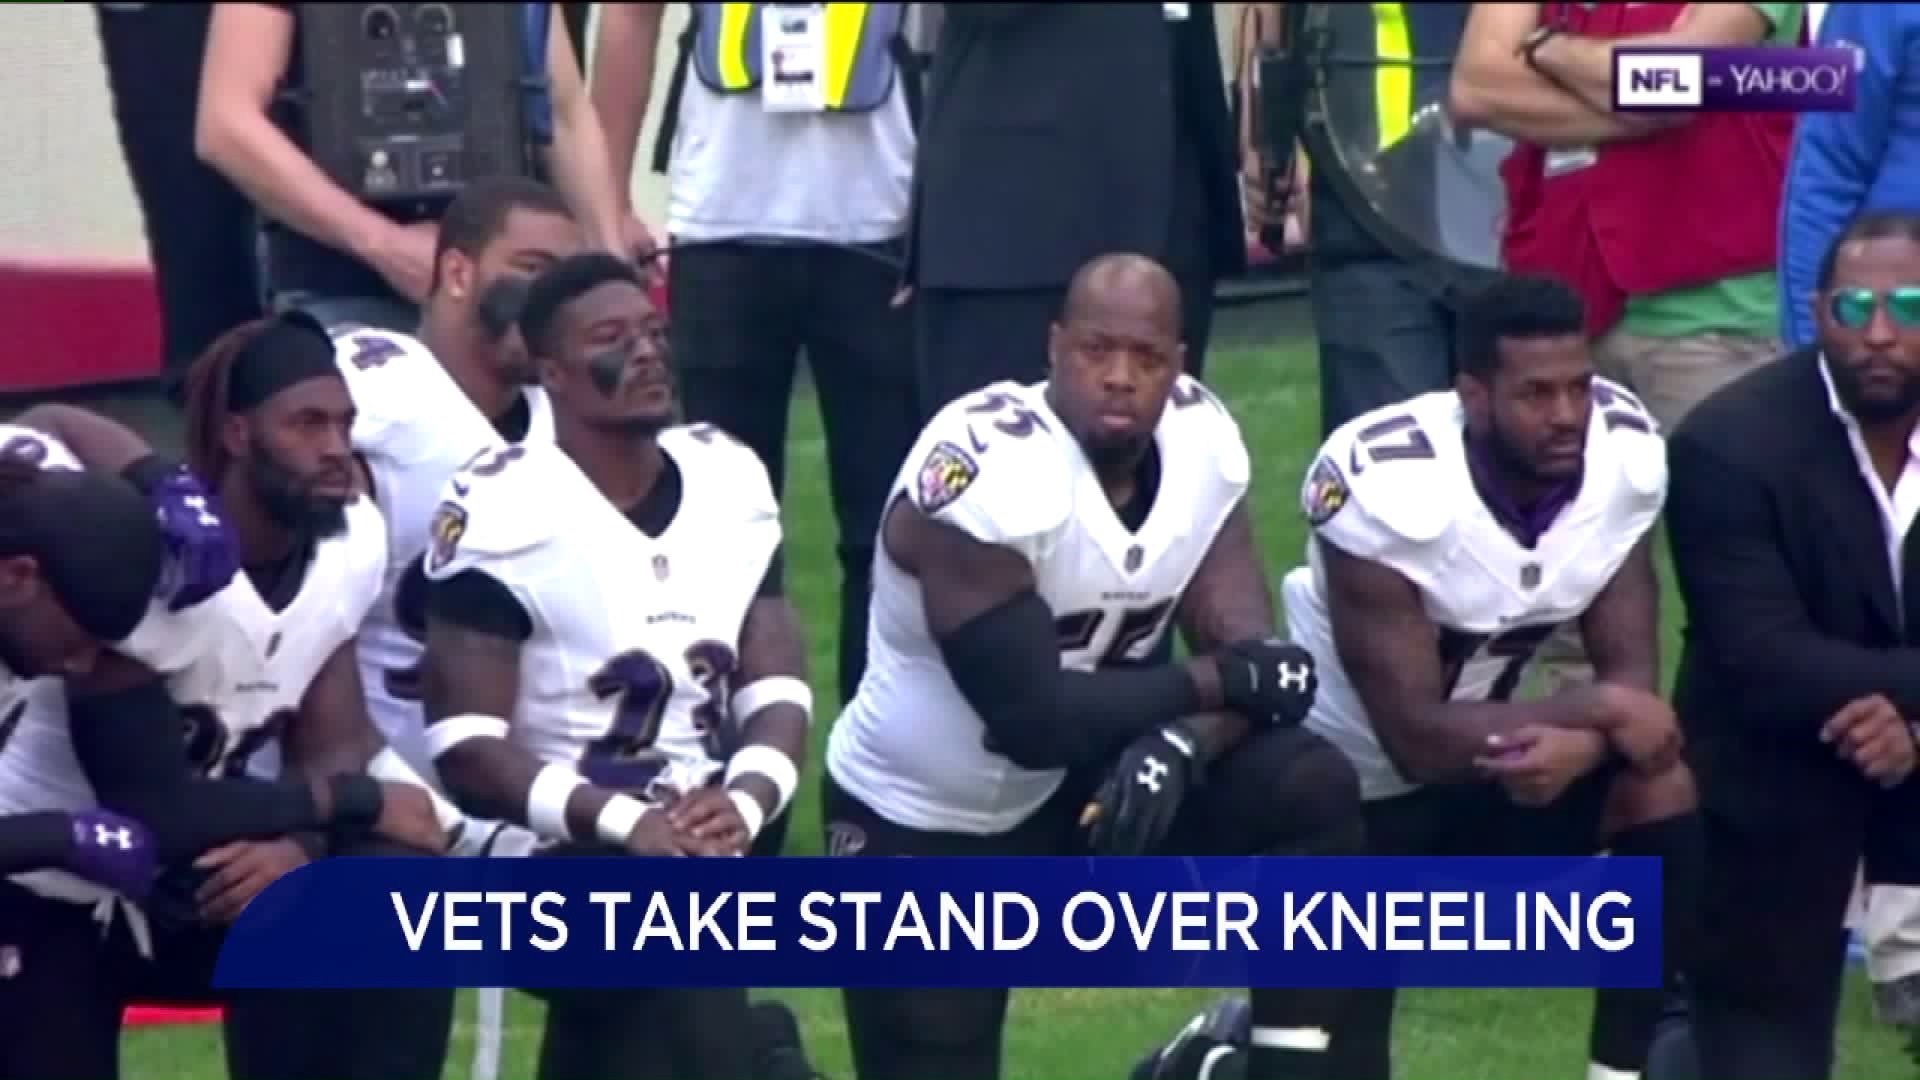 Vets Taking Stand on Kneeling